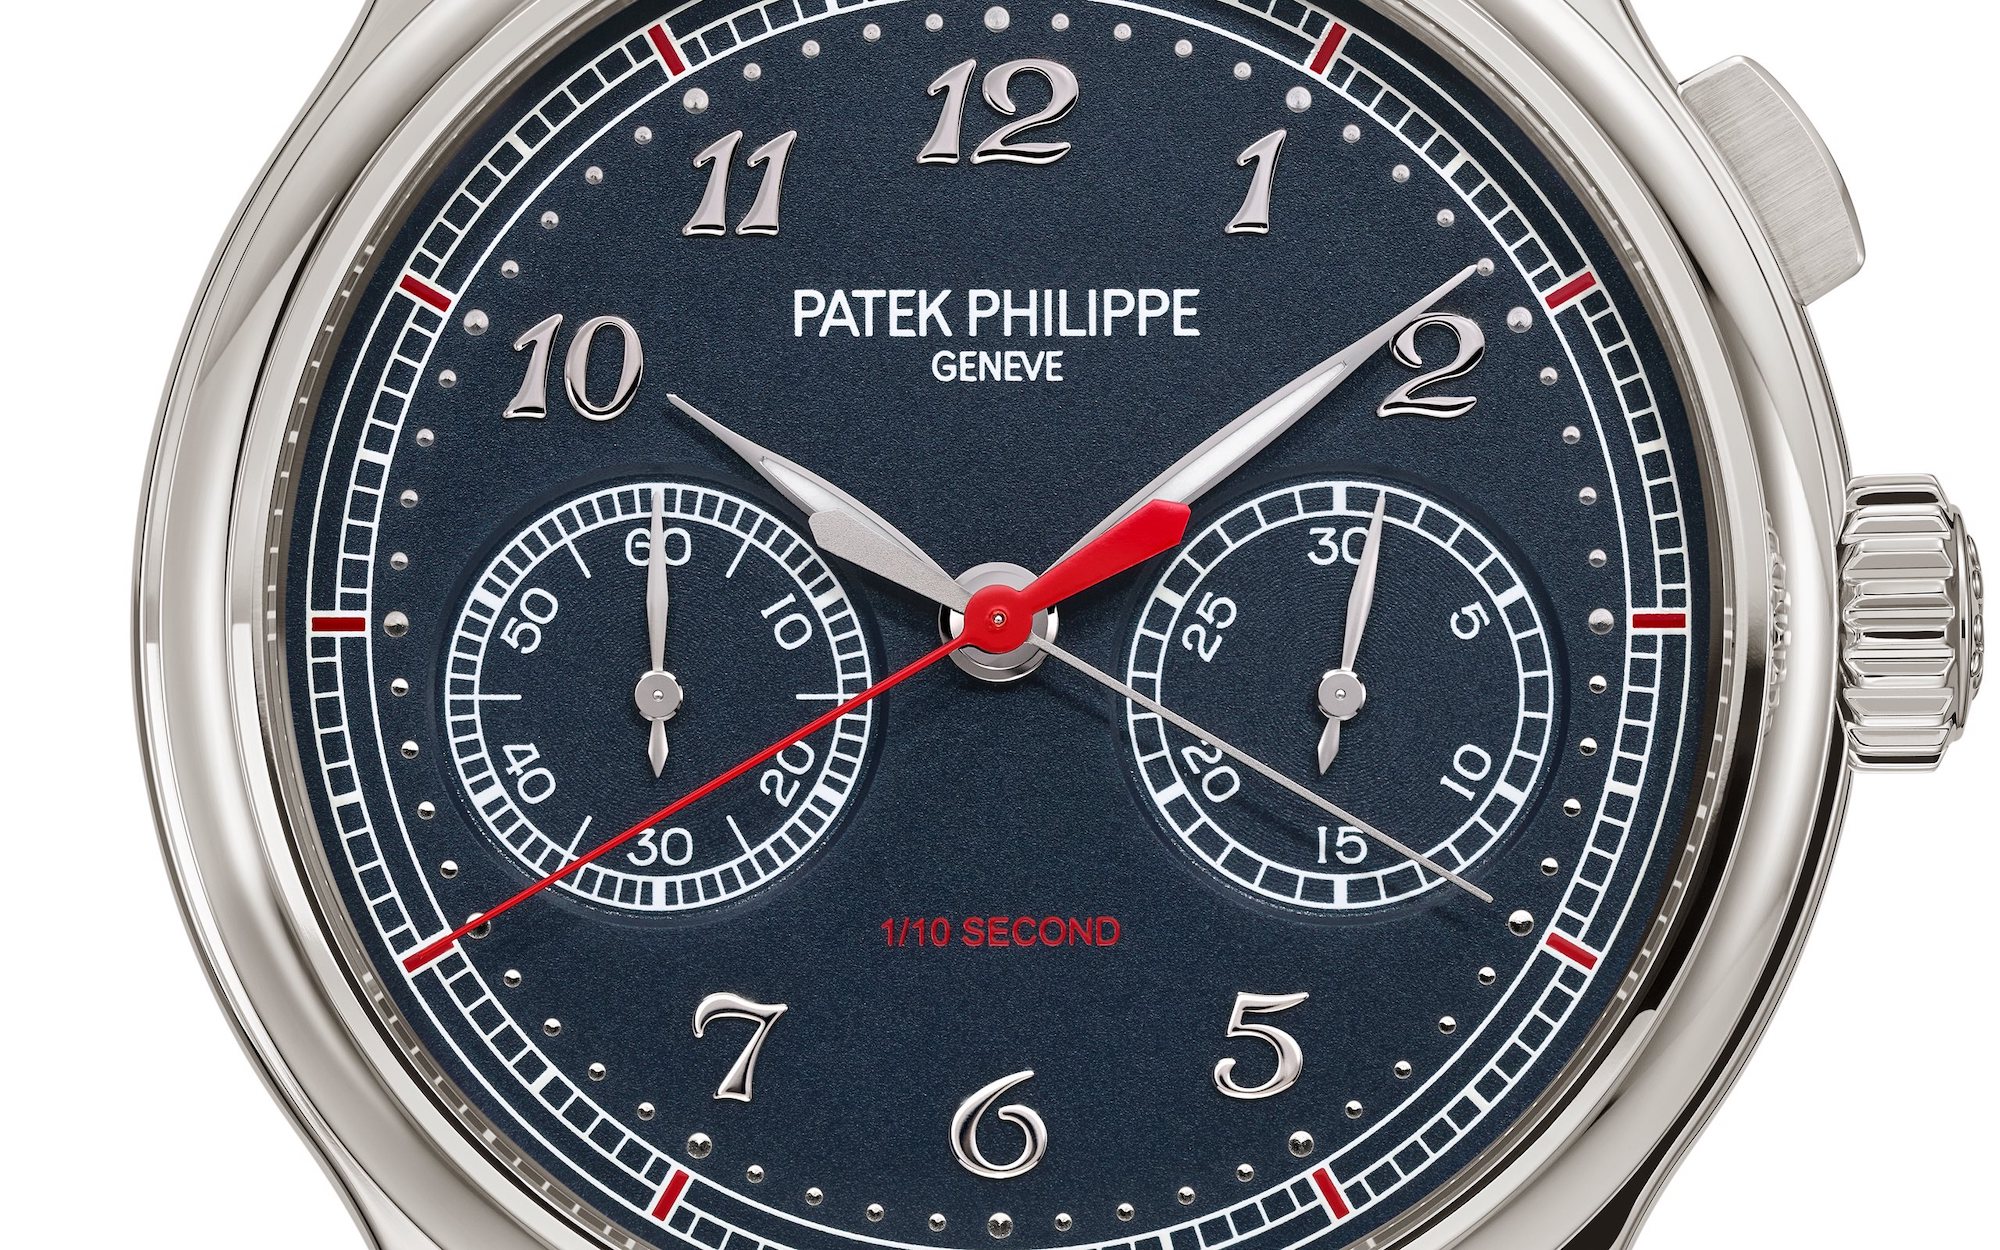 Patek Philippe 1:10th Second Monopusher Chronograph 5470P-001 Detalle